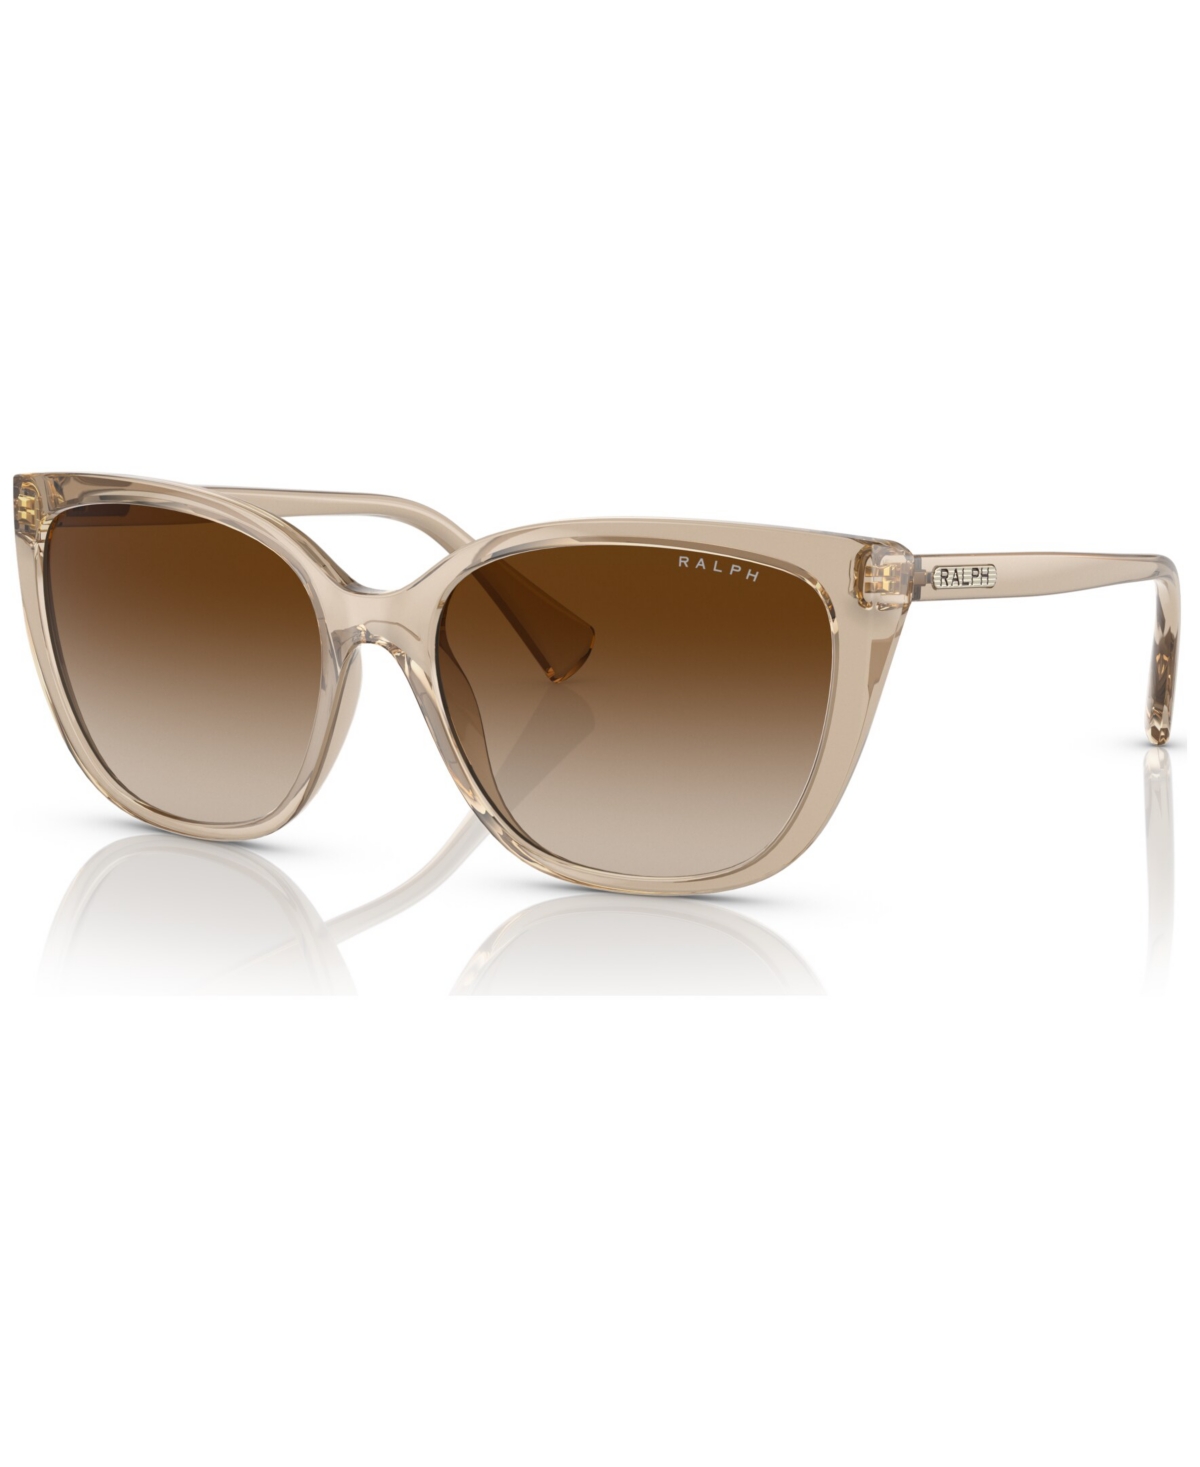 Women's Sunglasses, RA527456-y - Shiny Transparent Brown